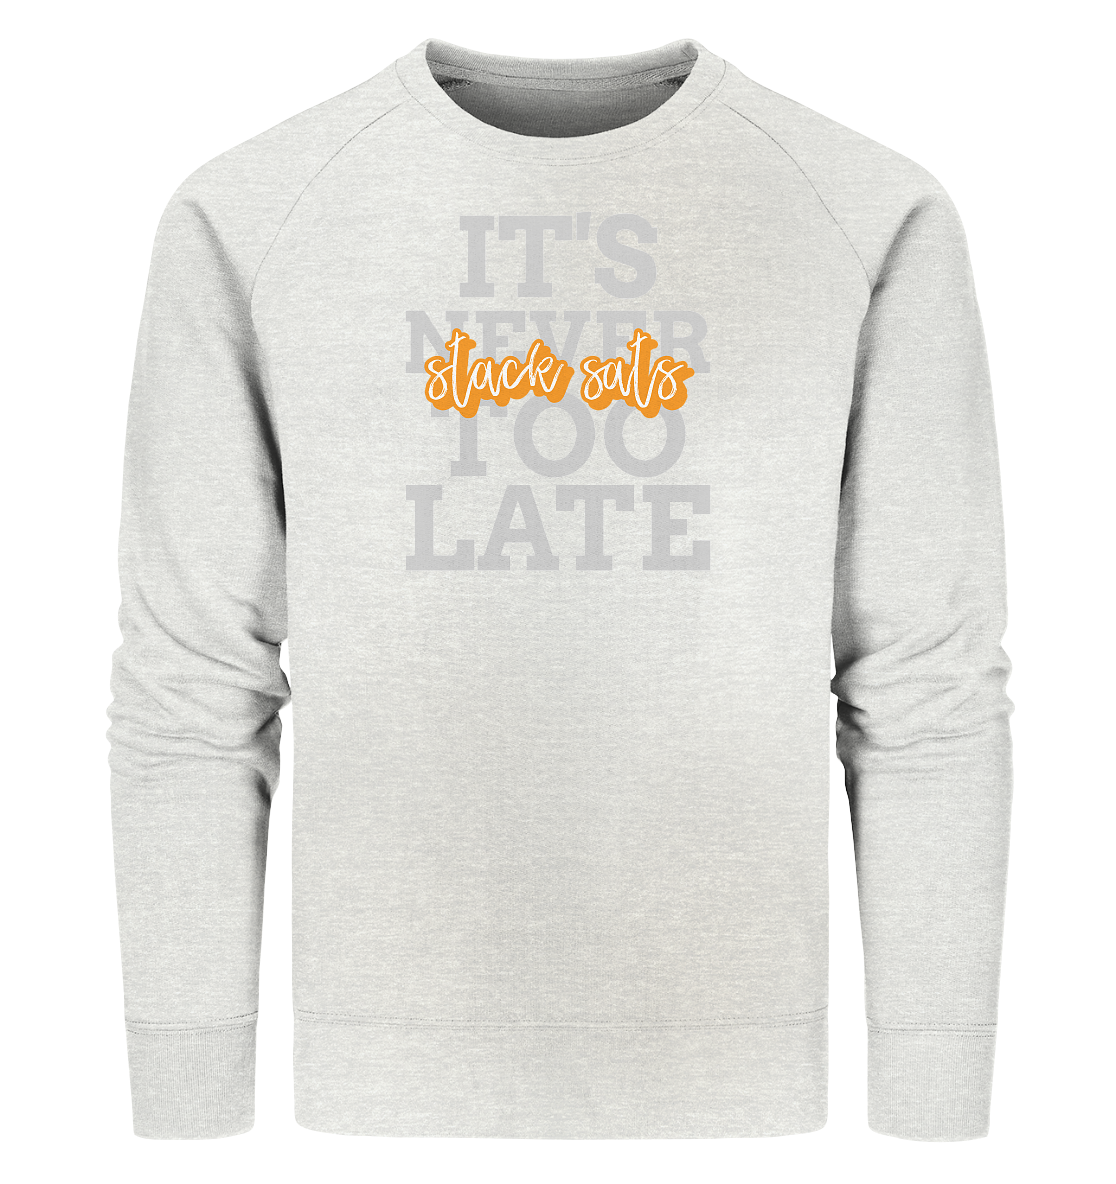 bitcoin - its never too late stack sats - three - Organic Sweatshirt